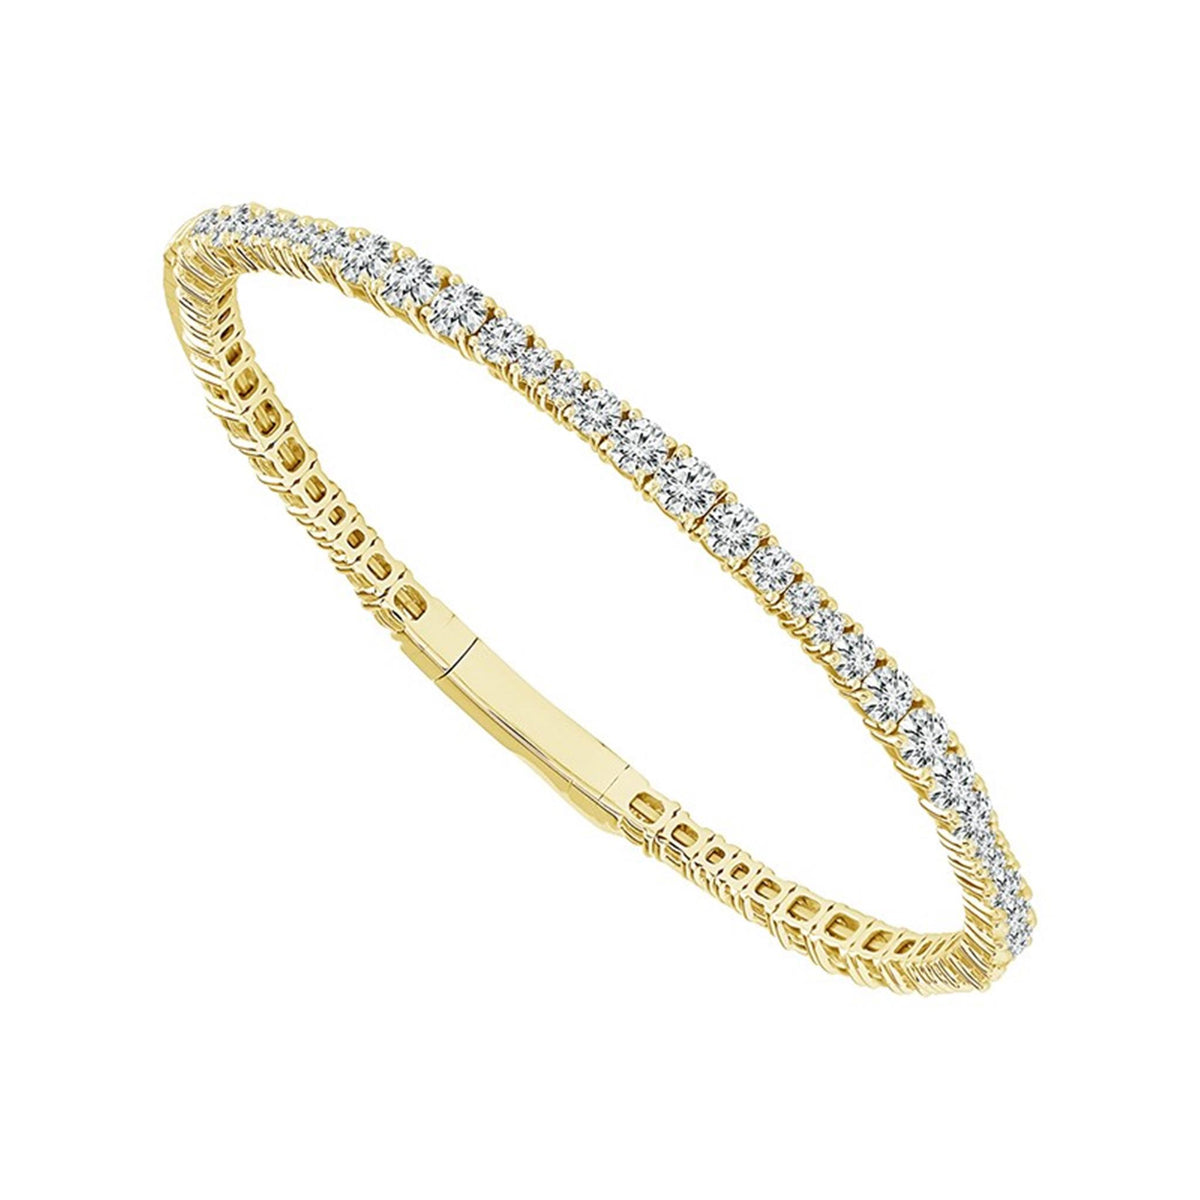 14Kt Yellow Gold Flex Bangle Bracelet With 4.75 cttw Natural Diamonds